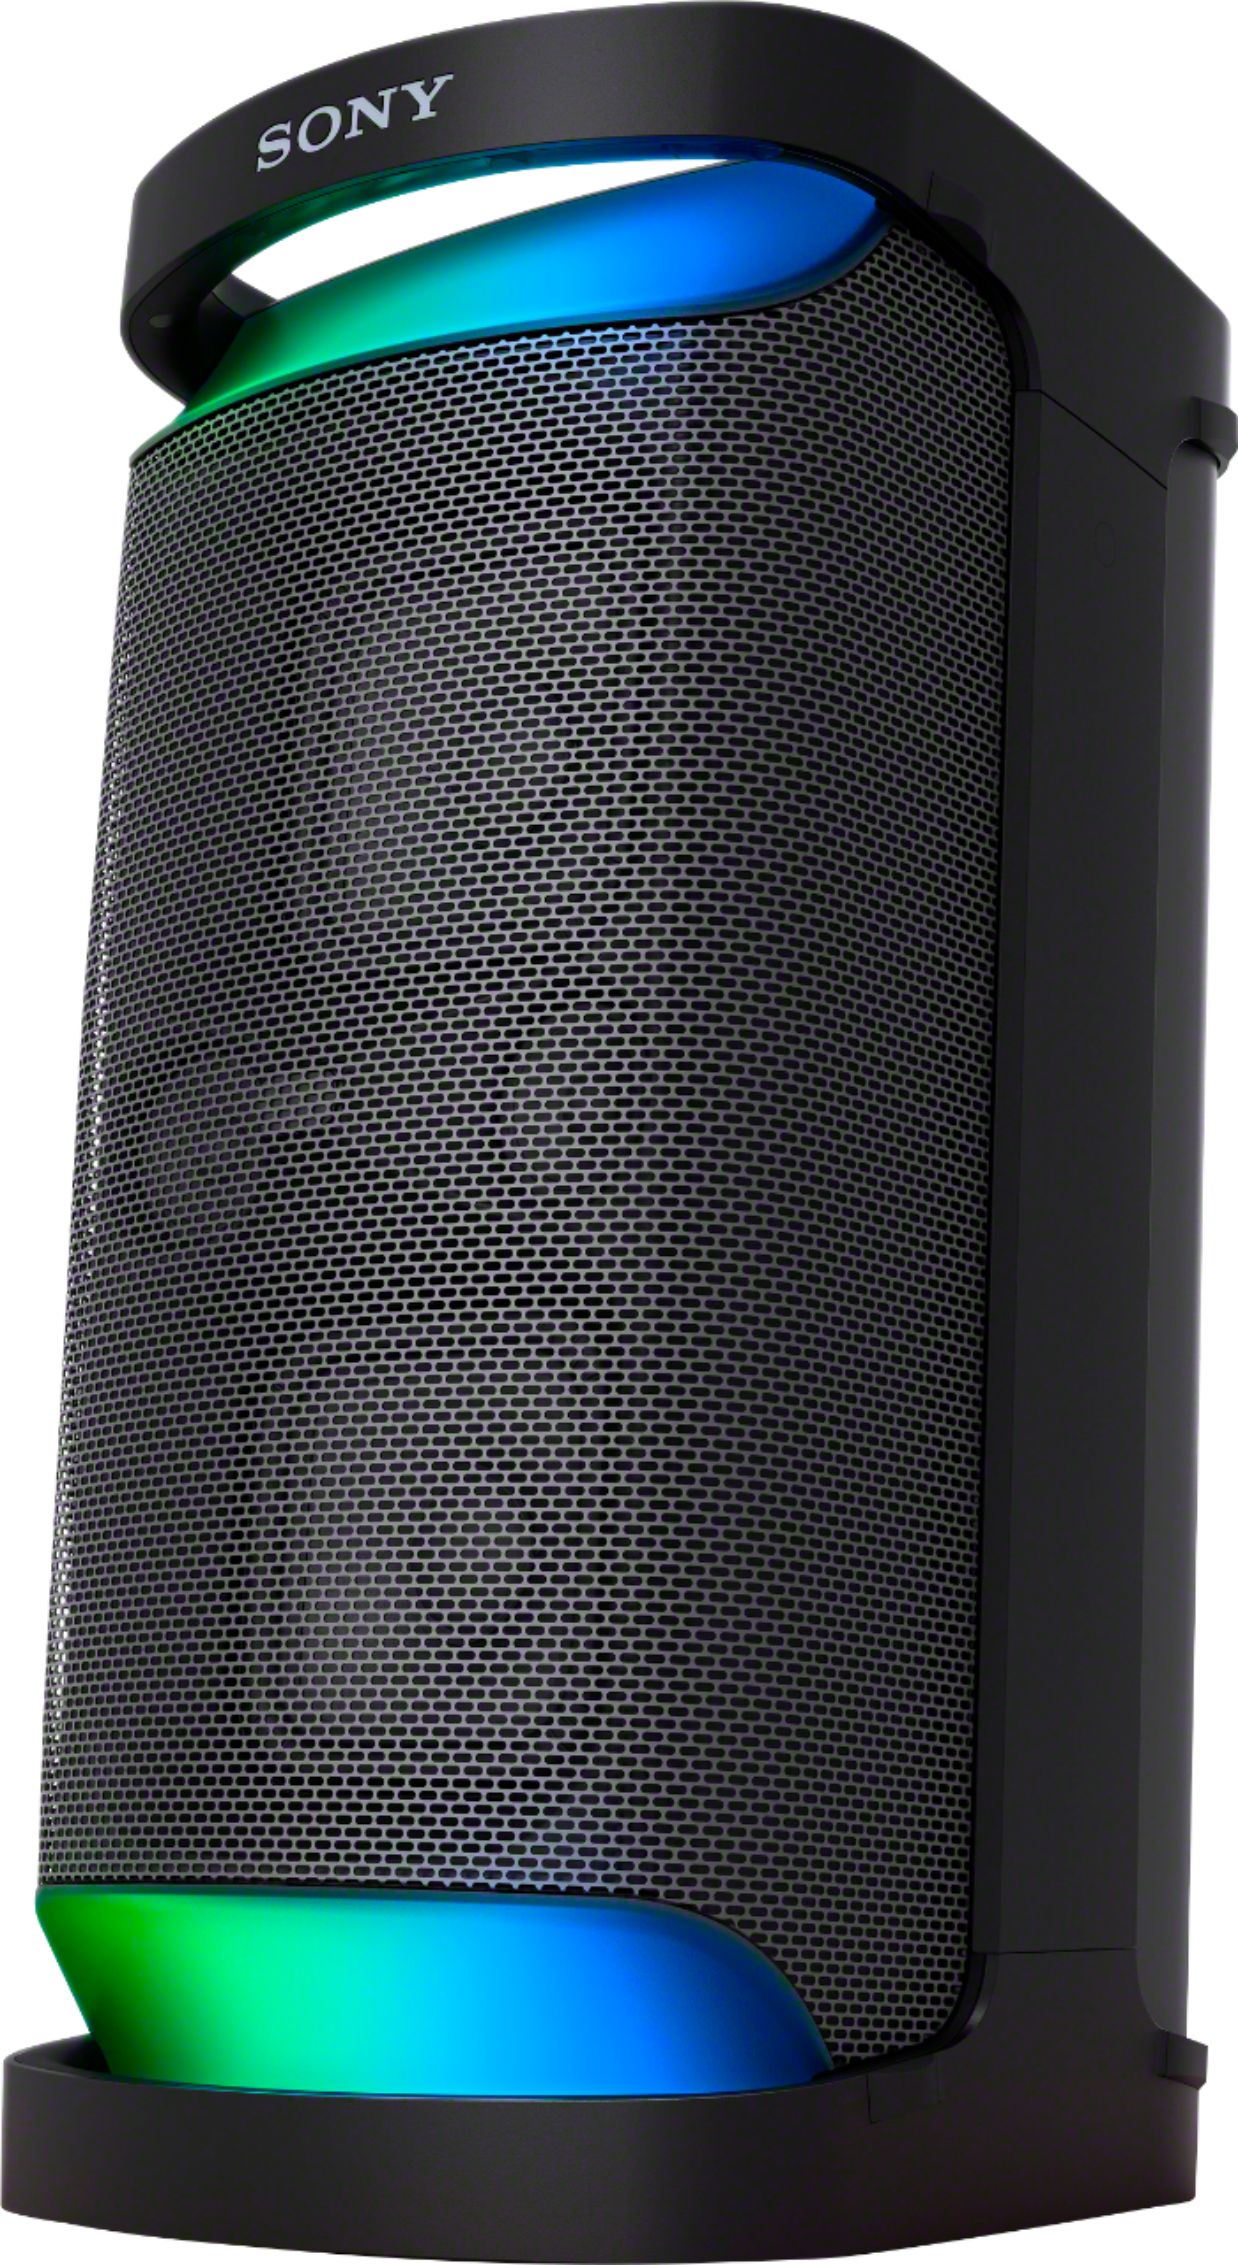 transmissie wees stil vredig Sony XP500 Portable Bluetooth Party Speaker with Water Resistance Black  SRSXP500 - Best Buy